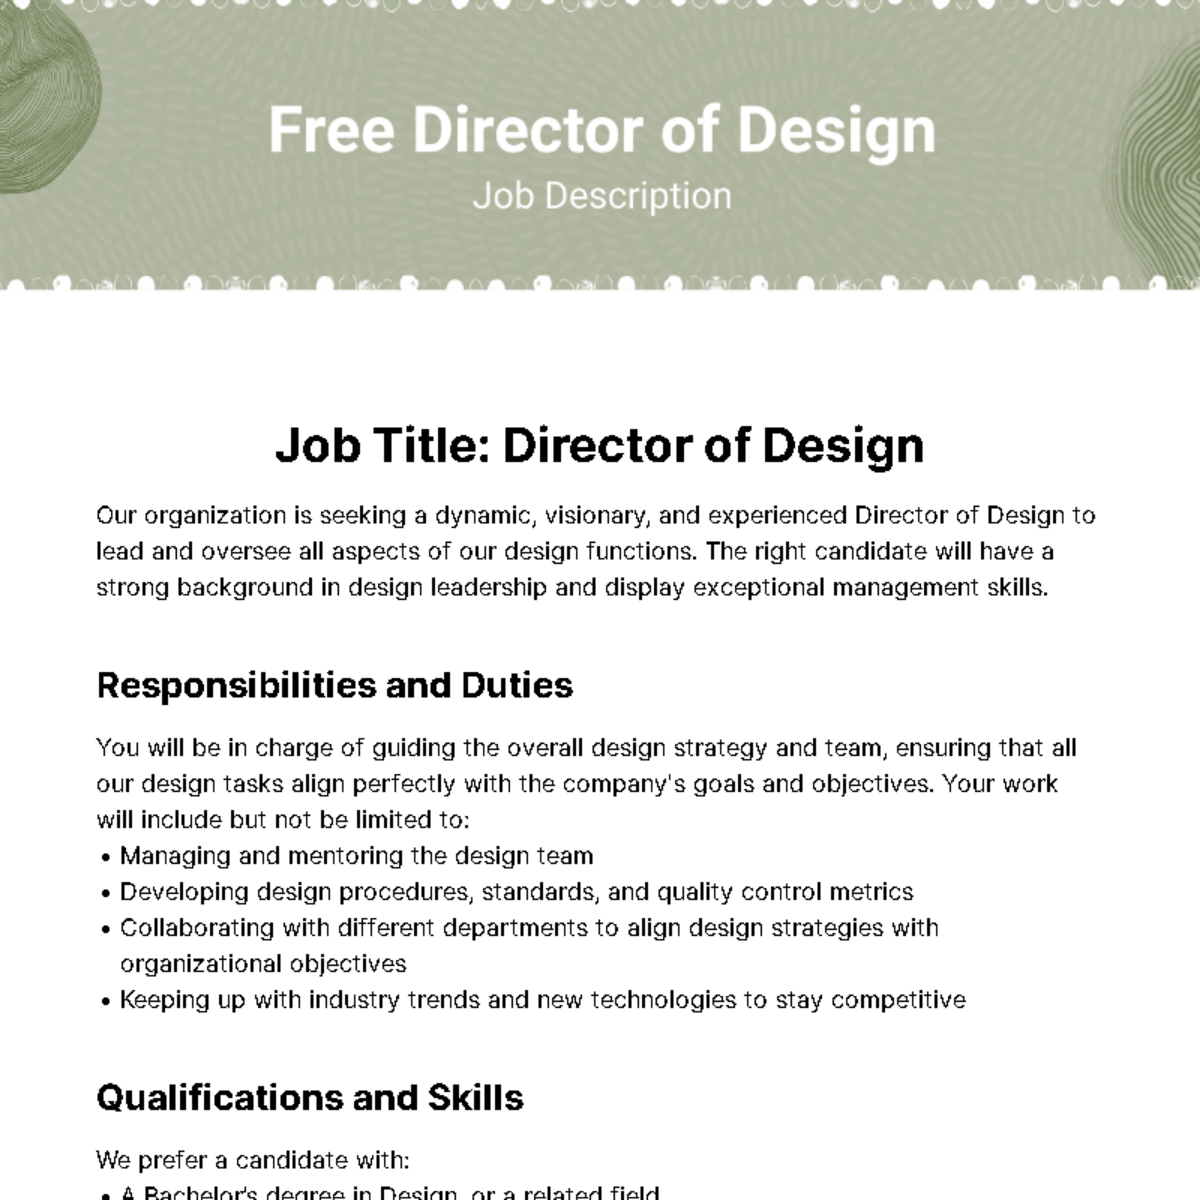 Free Director of Design Job Description Template